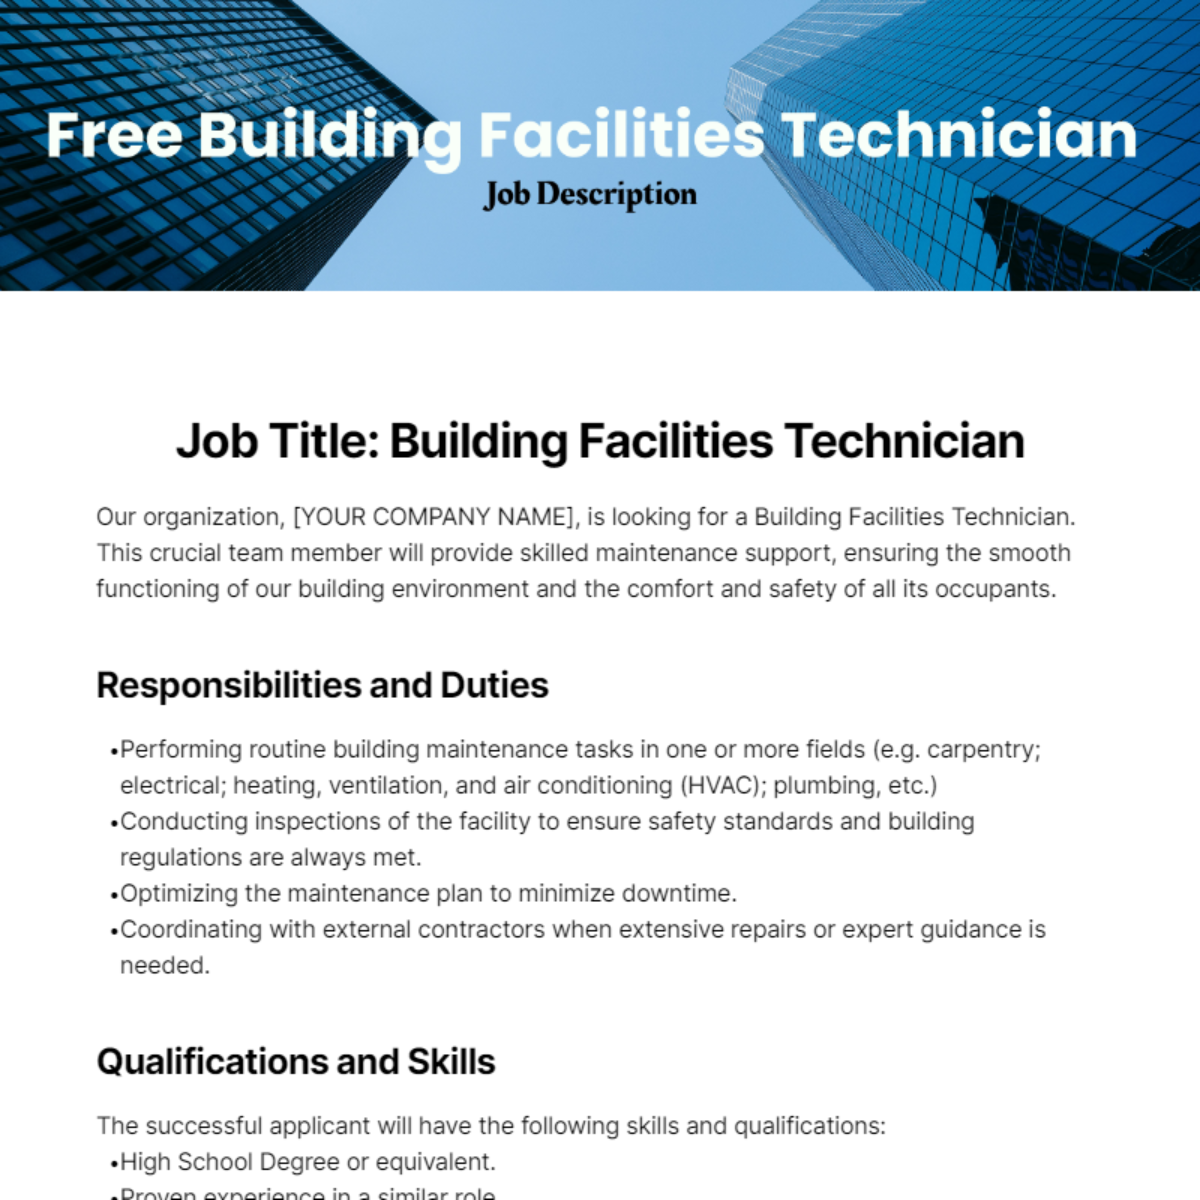 Free Building Facilities Technician Job Description Template